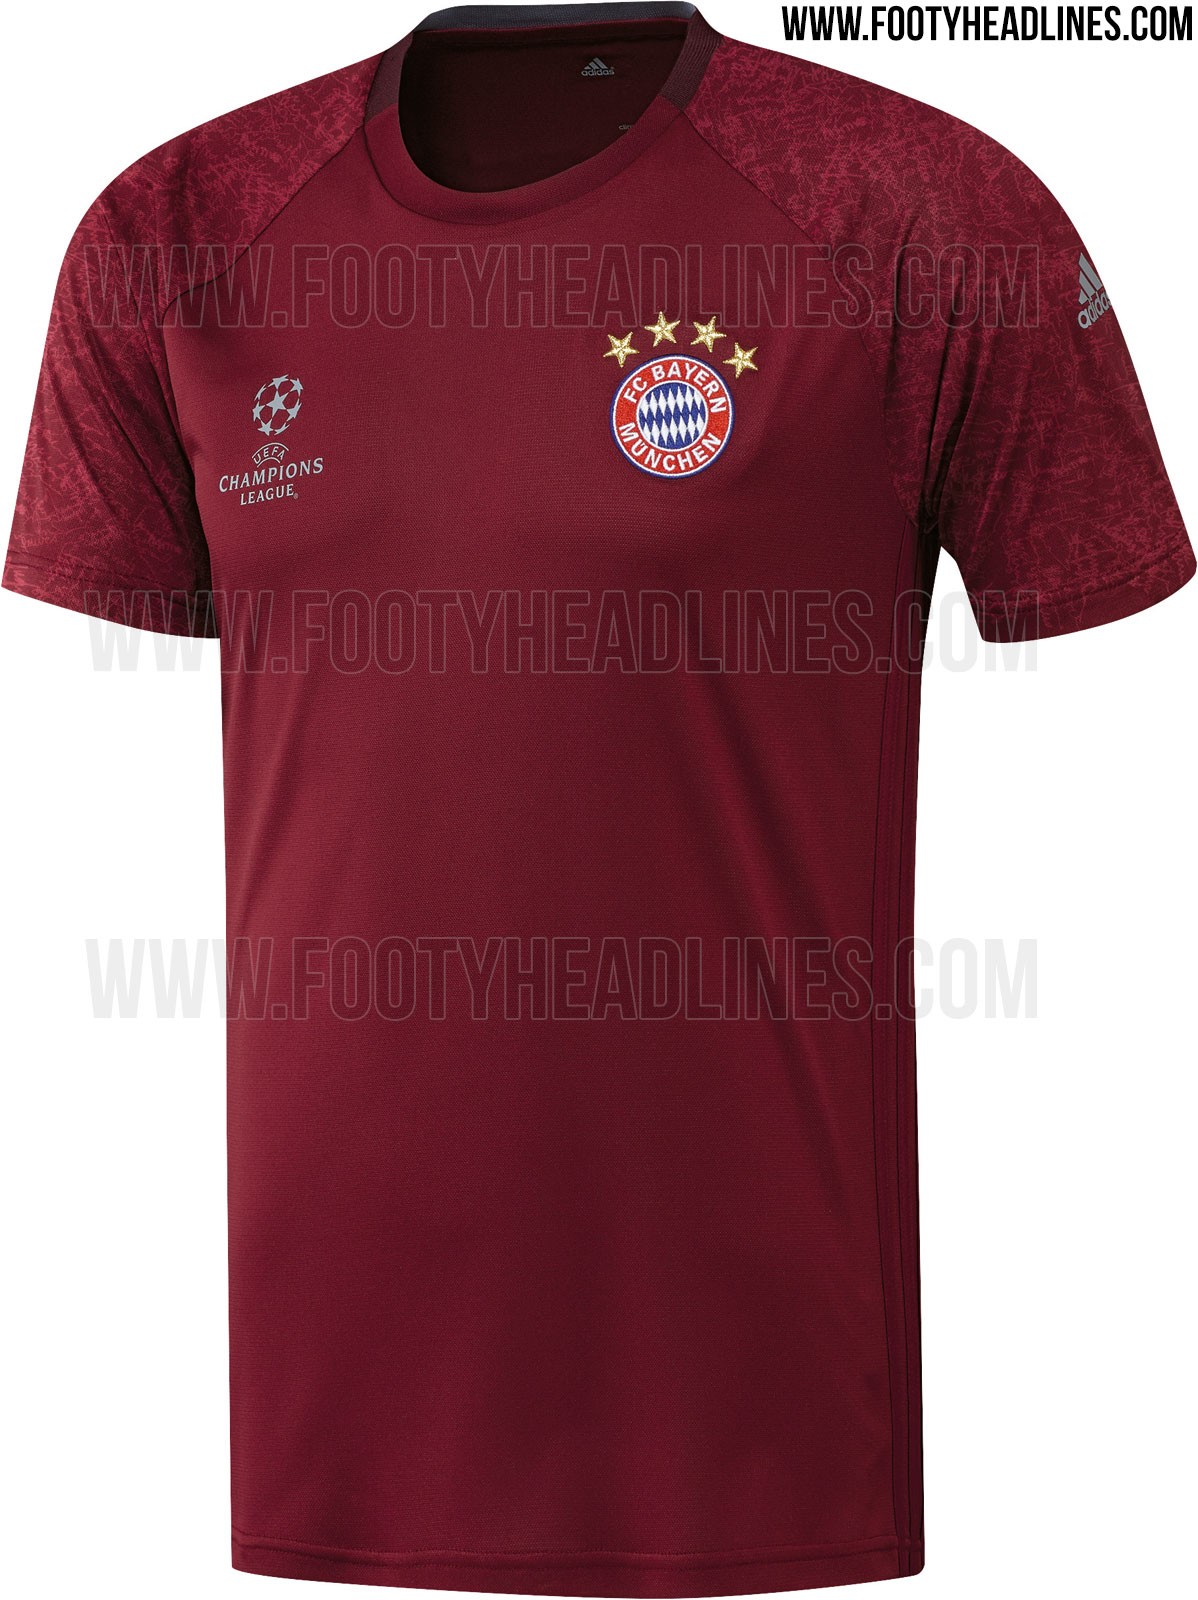 Zelfrespect Richtlijnen scherp Bayern Munich 16-17 Champions League Training Shirt Leaked - Footy Headlines